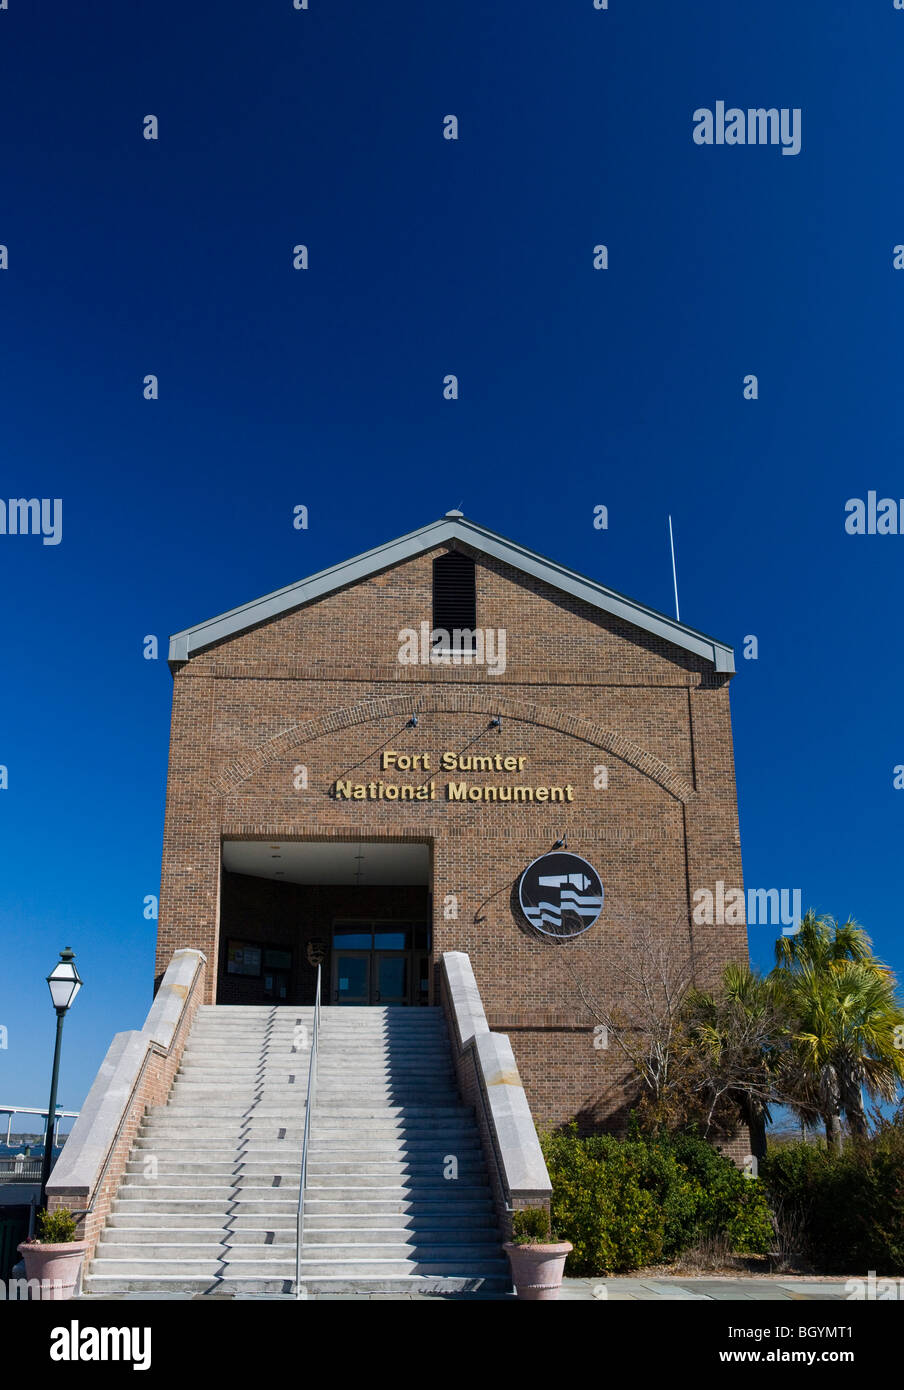 Fort Sumter National Monument visitor's center, Charleston, South Carolina, United States of America. Stock Photo